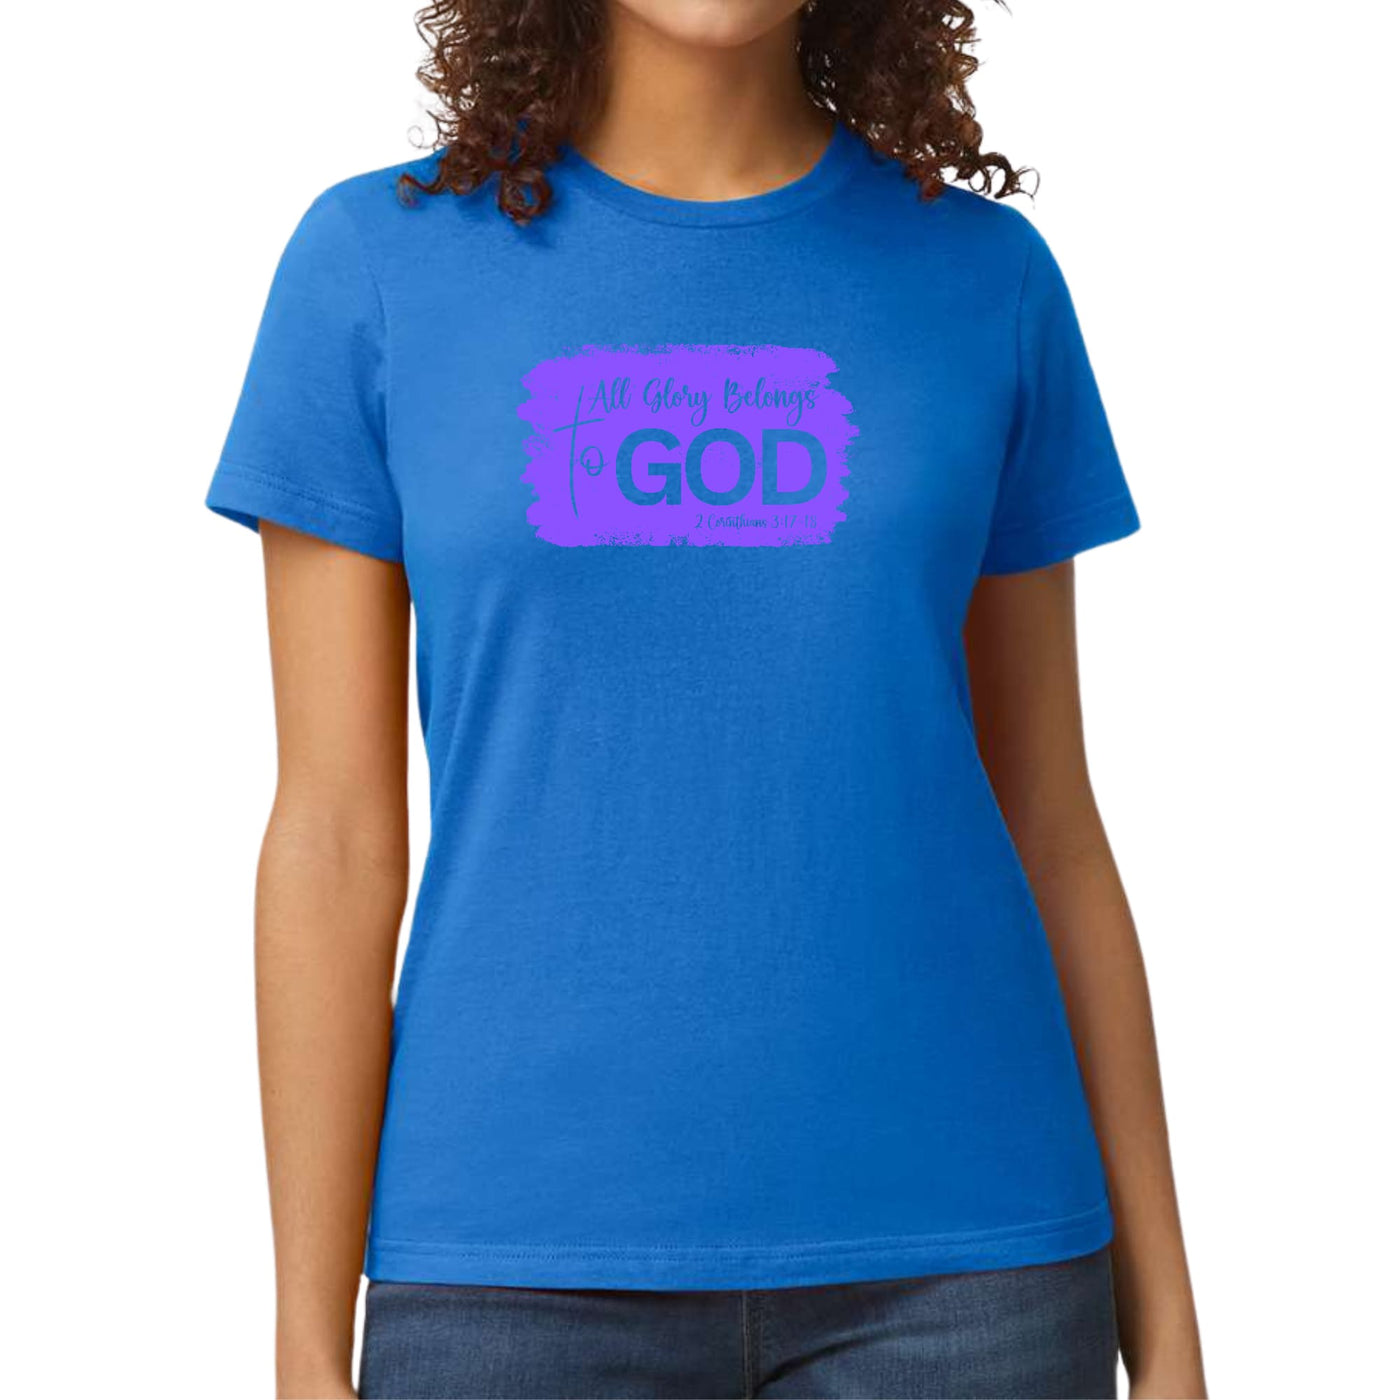 Womens Graphic T-shirt All Glory Belongs To God Lavender - Womens | T-Shirts